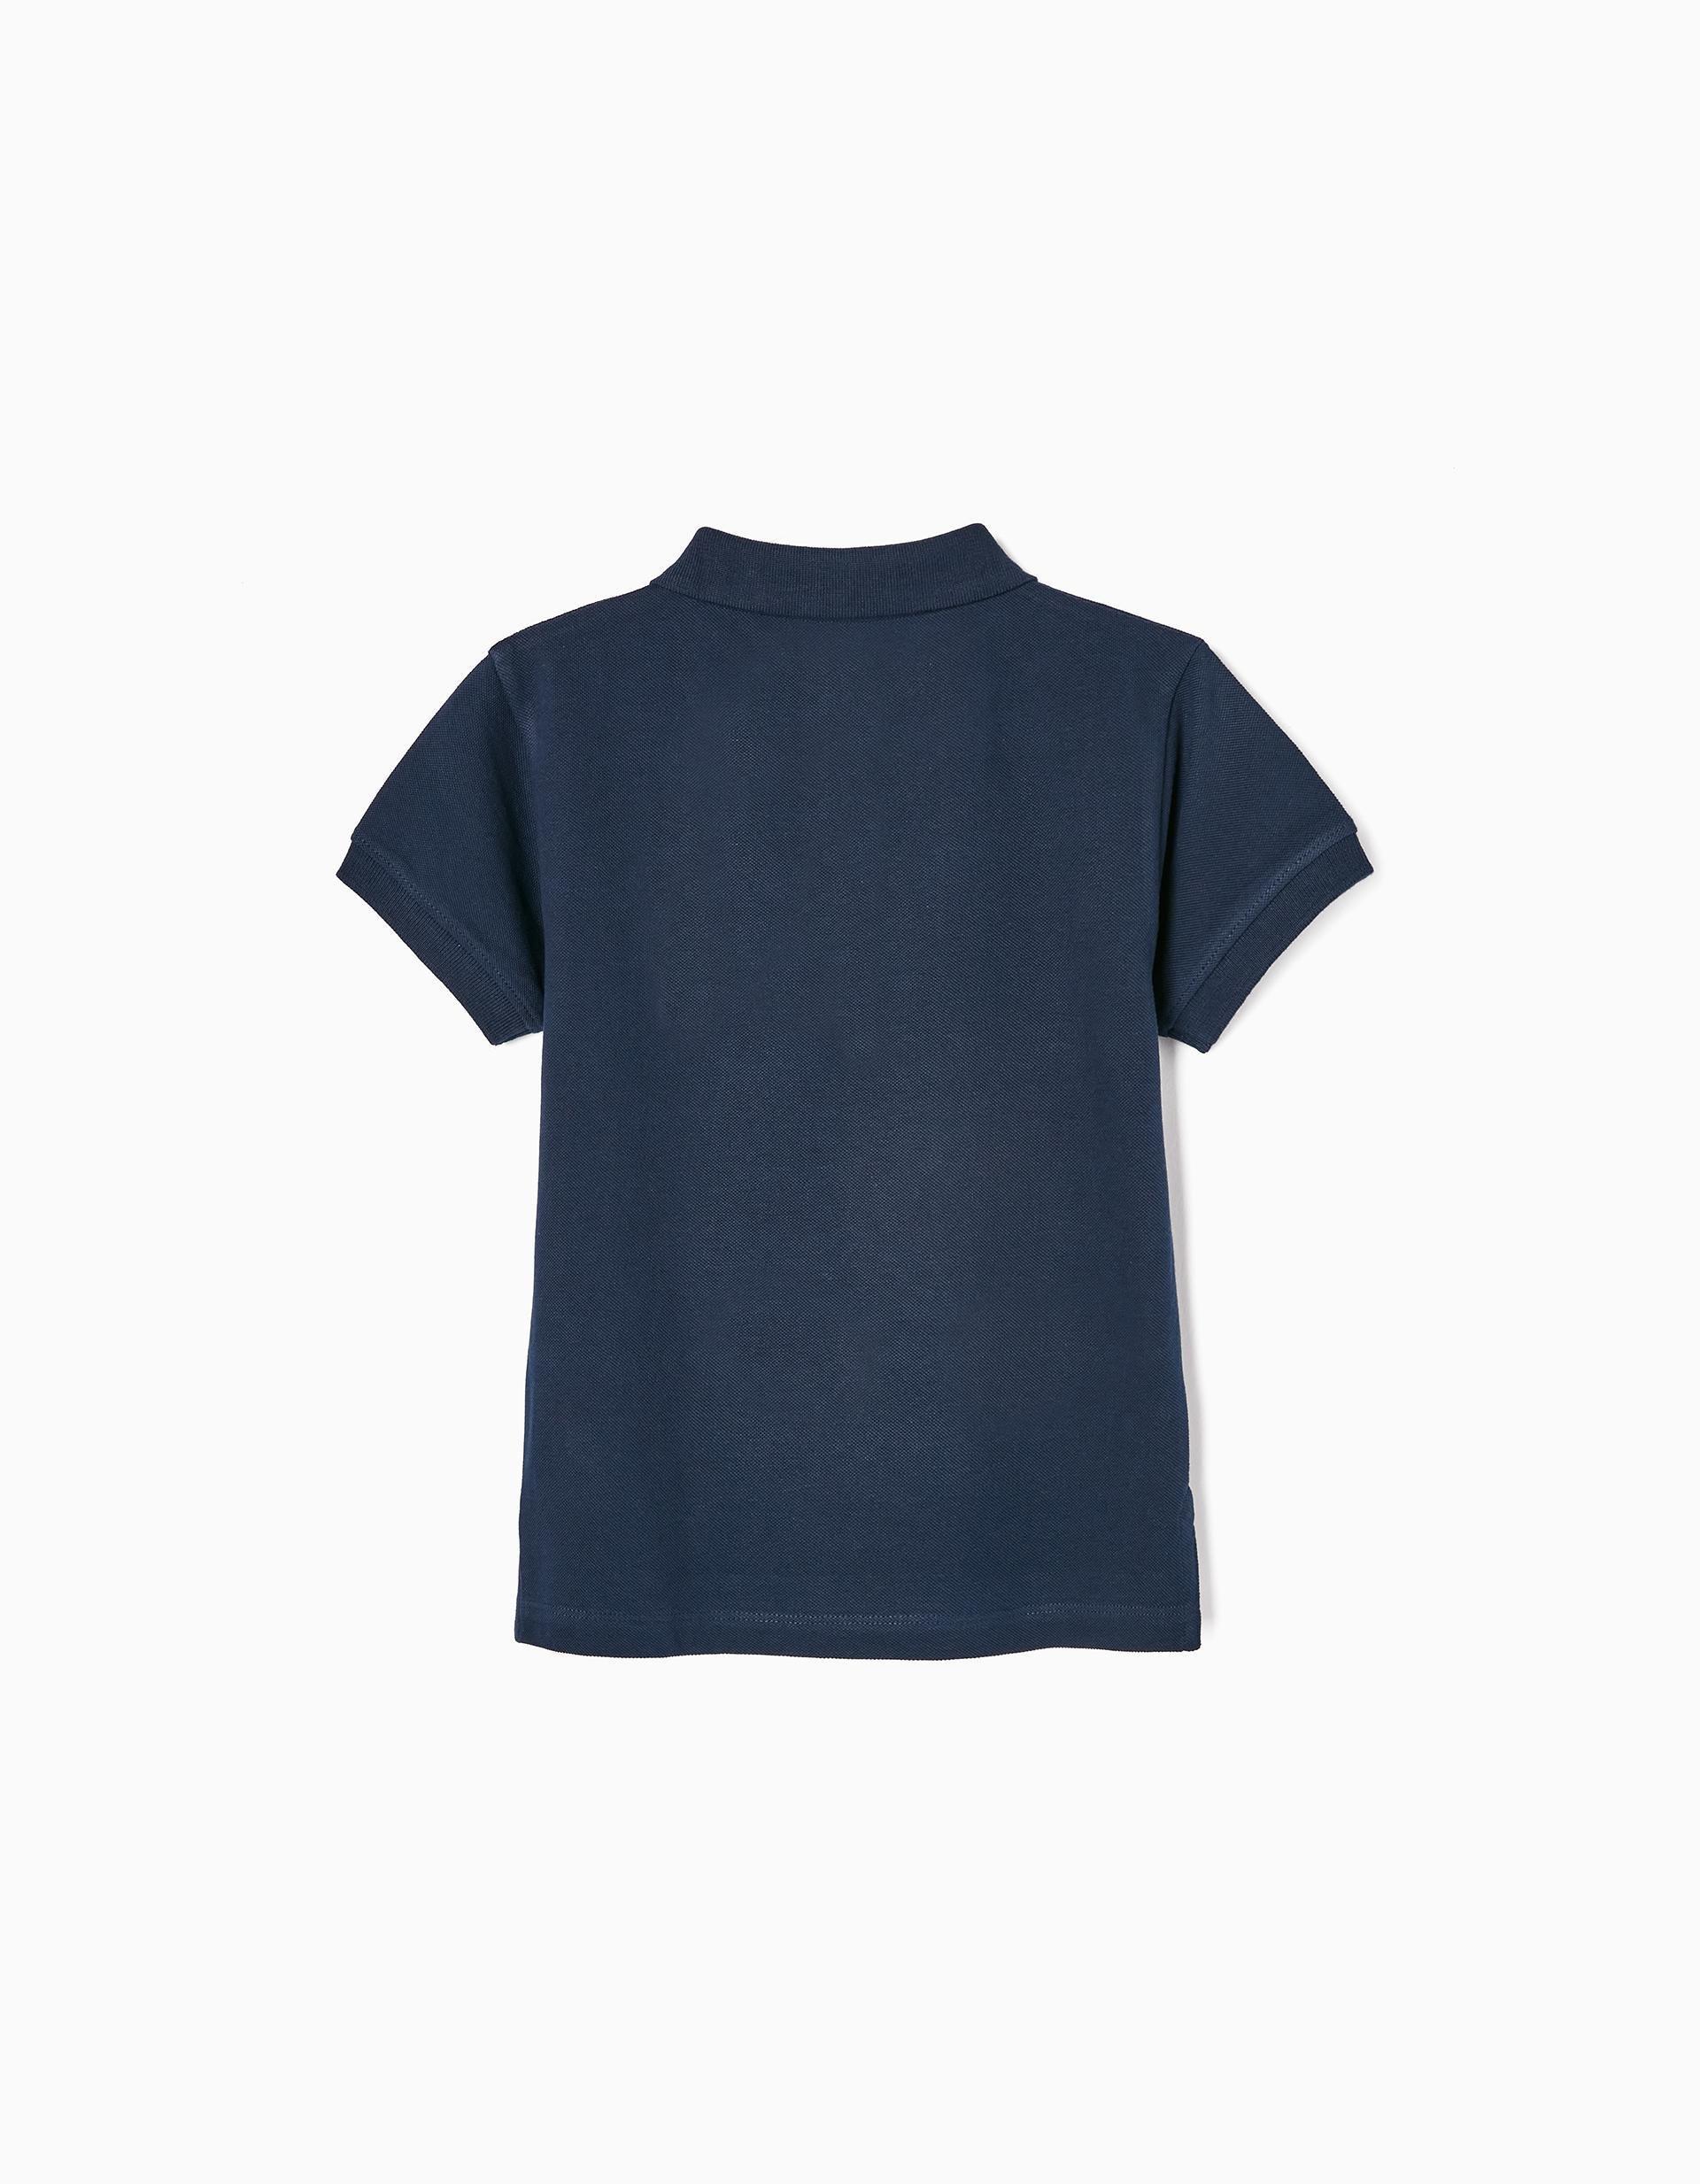 Gant - Dark Polo Neck Plain T-Shirt, Kids Boys